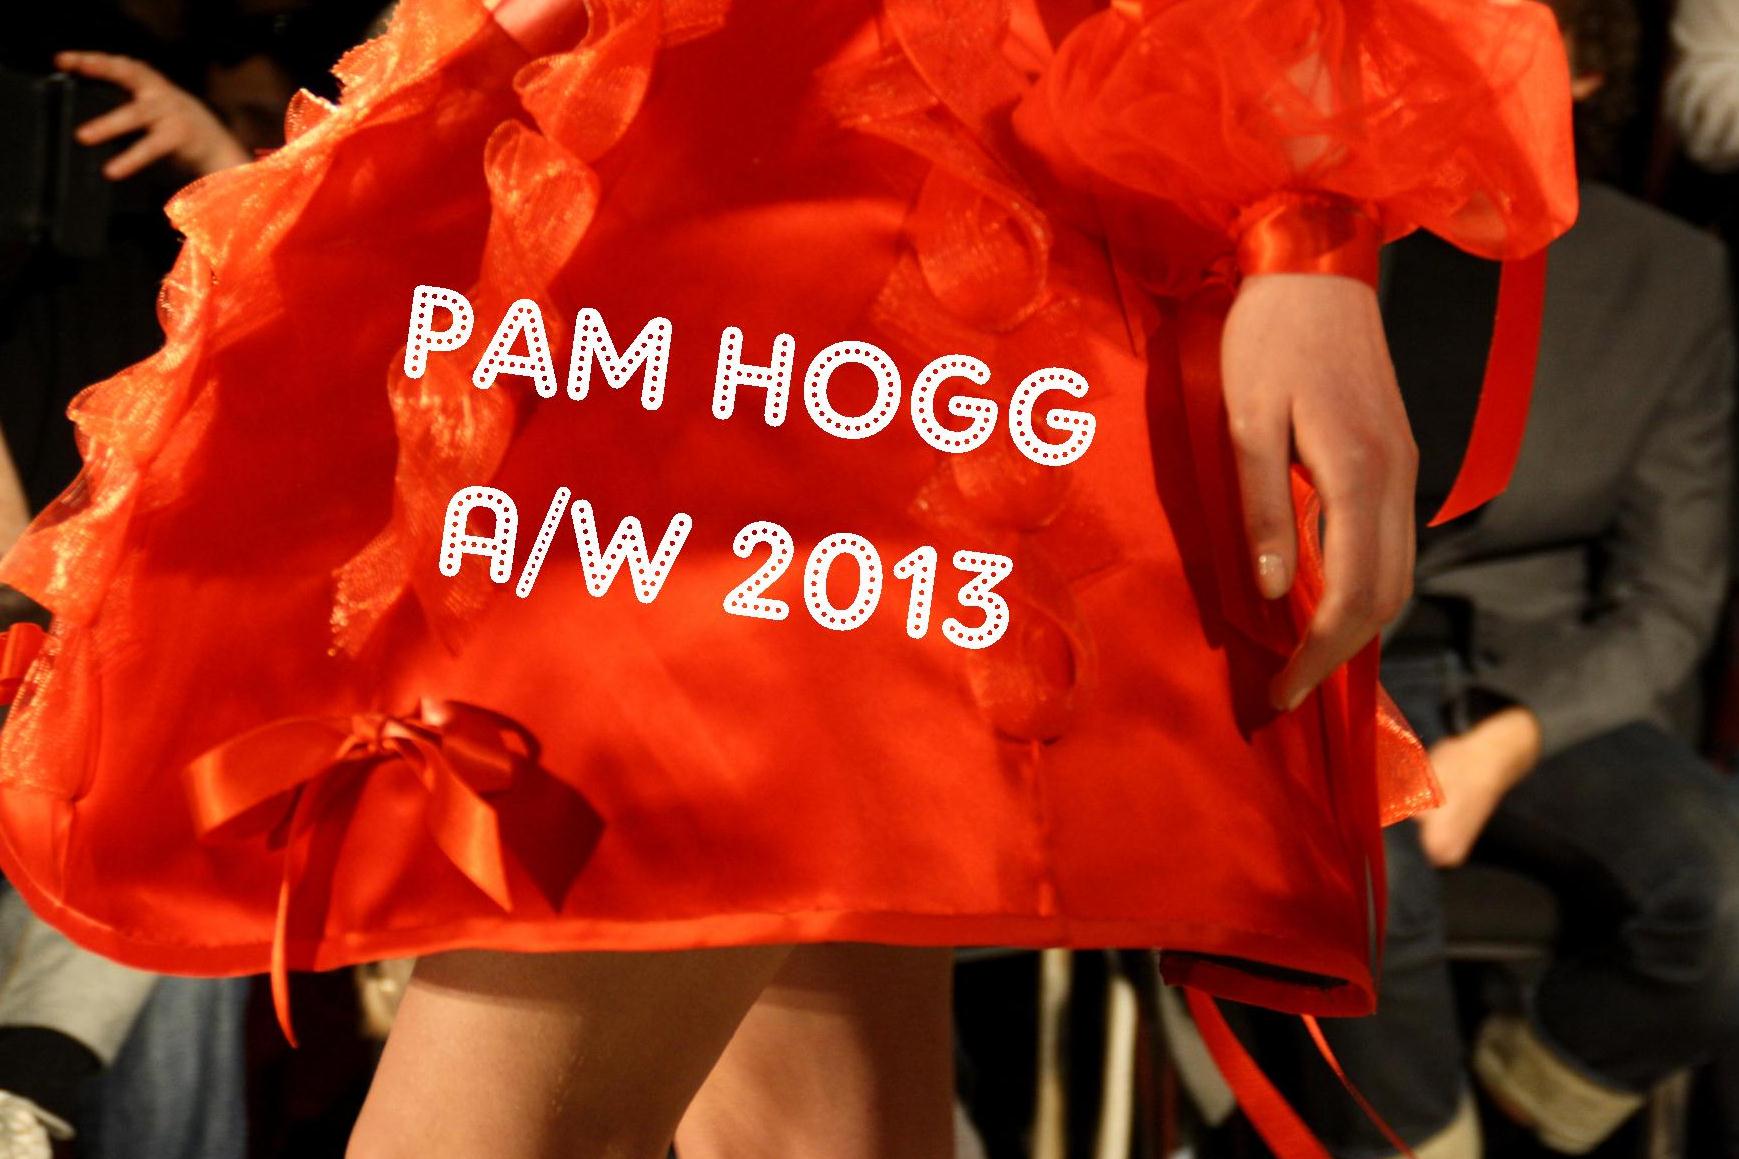 Pam Hogg A/W 2013 London Fashion Week